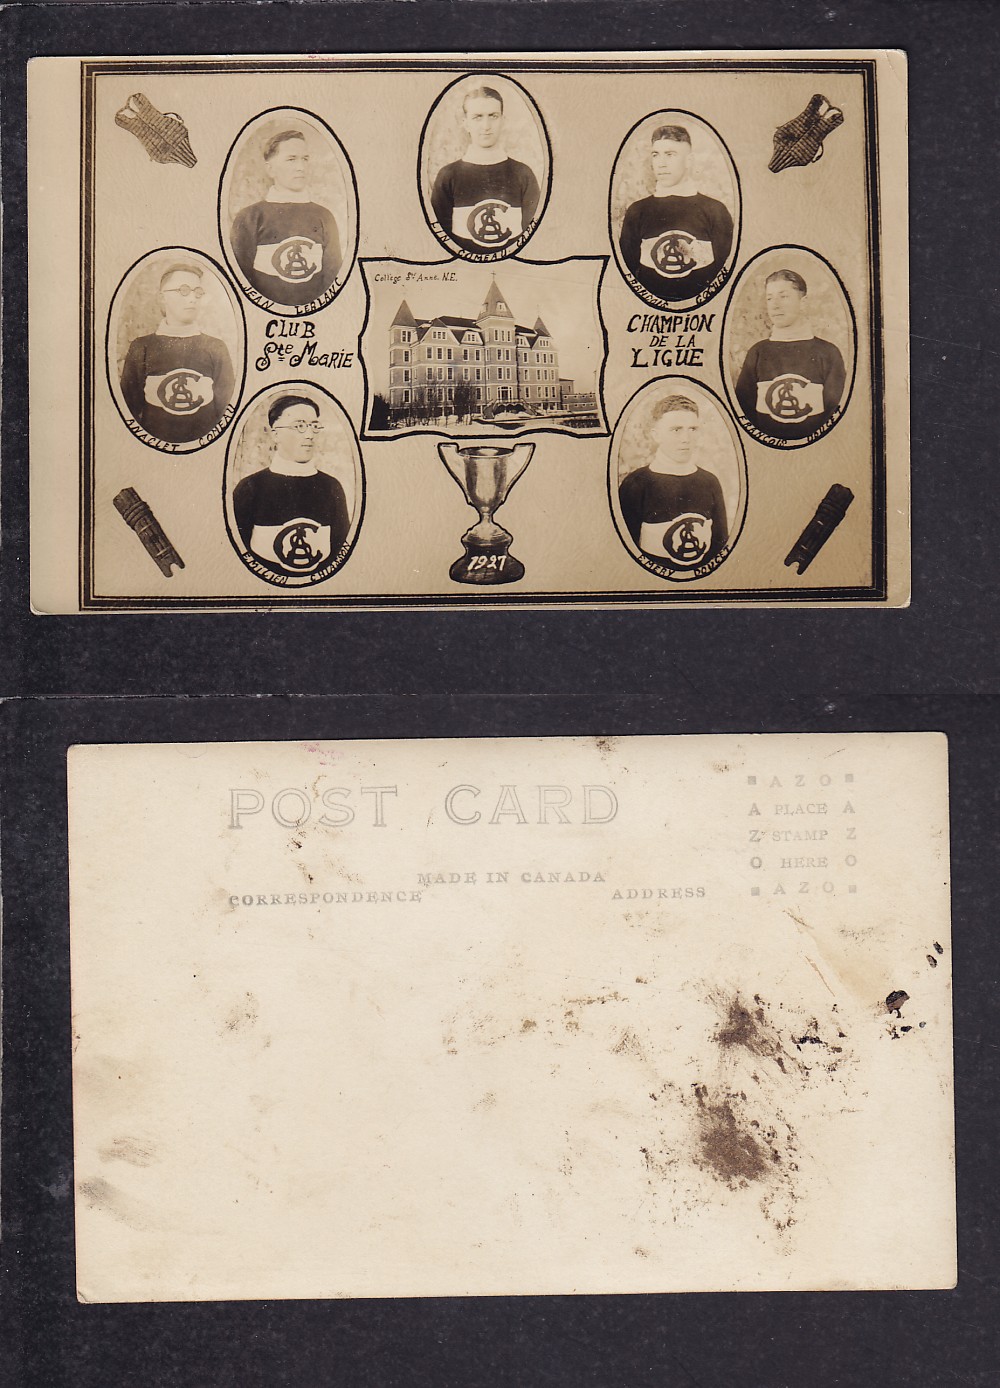 1927 STE-MARIE HOCKEY TEAM POST CARD photo